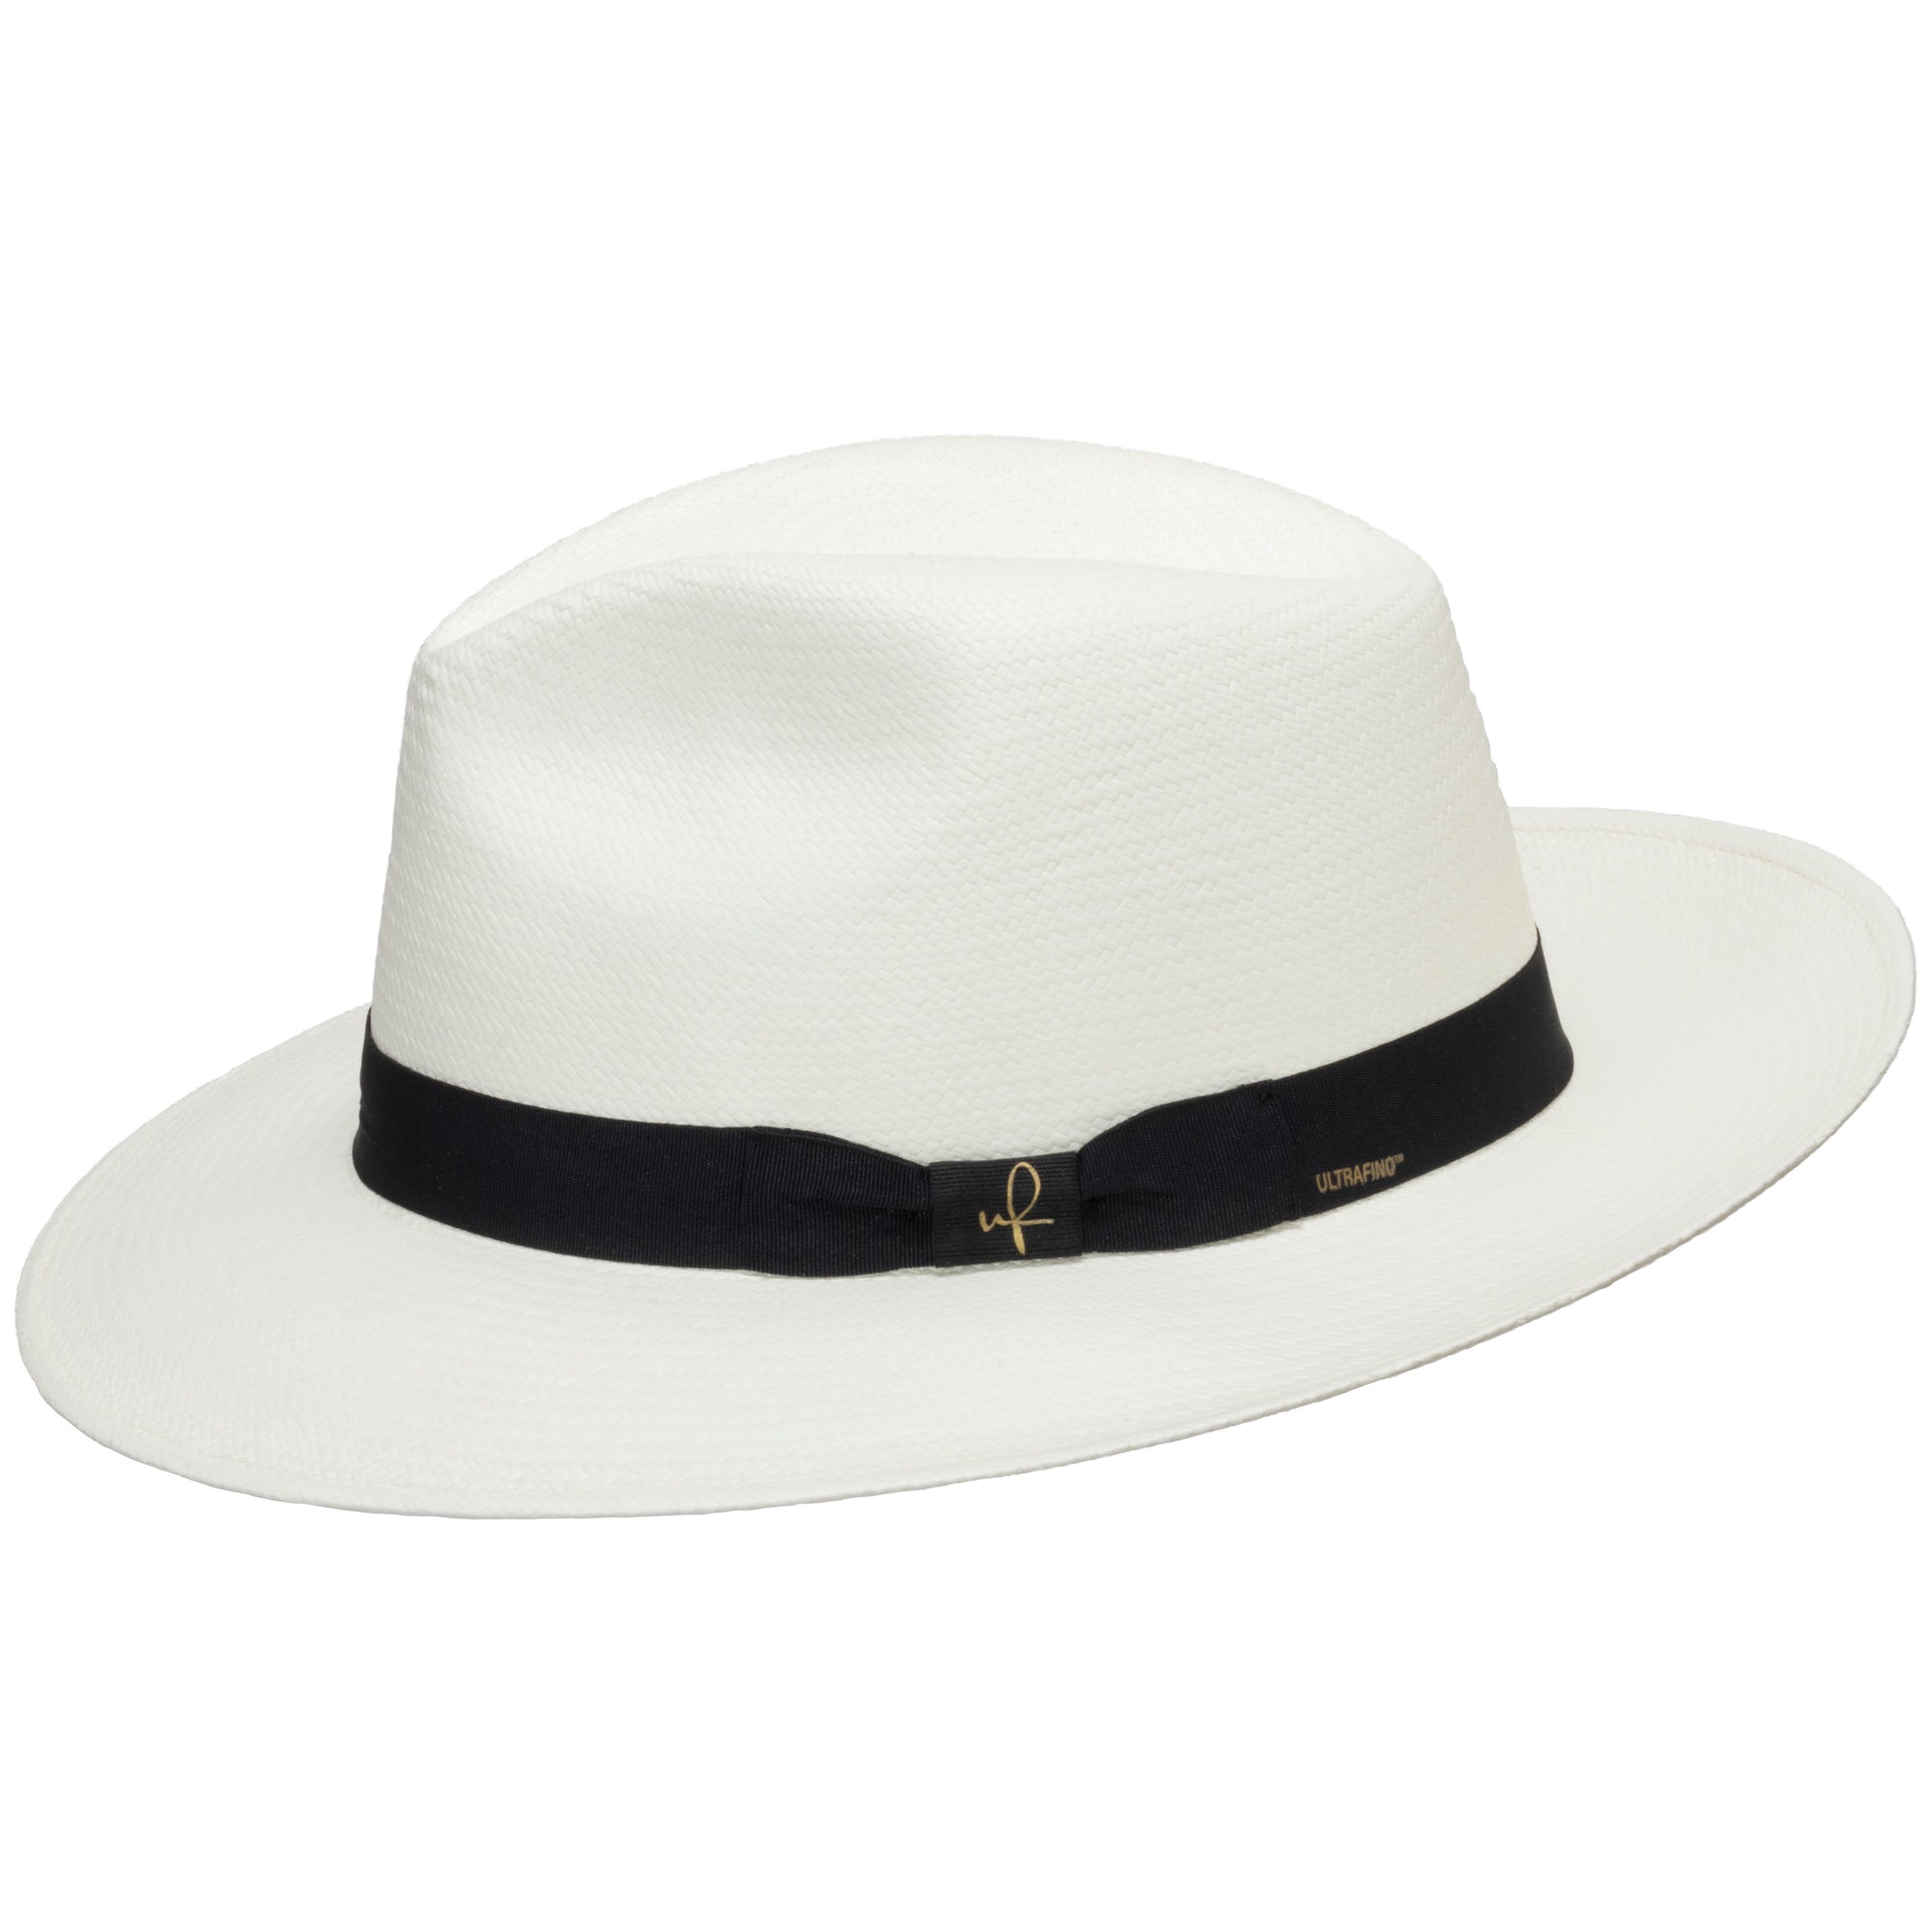 Stansfield Panama Fedora  Shop Men's Hats at